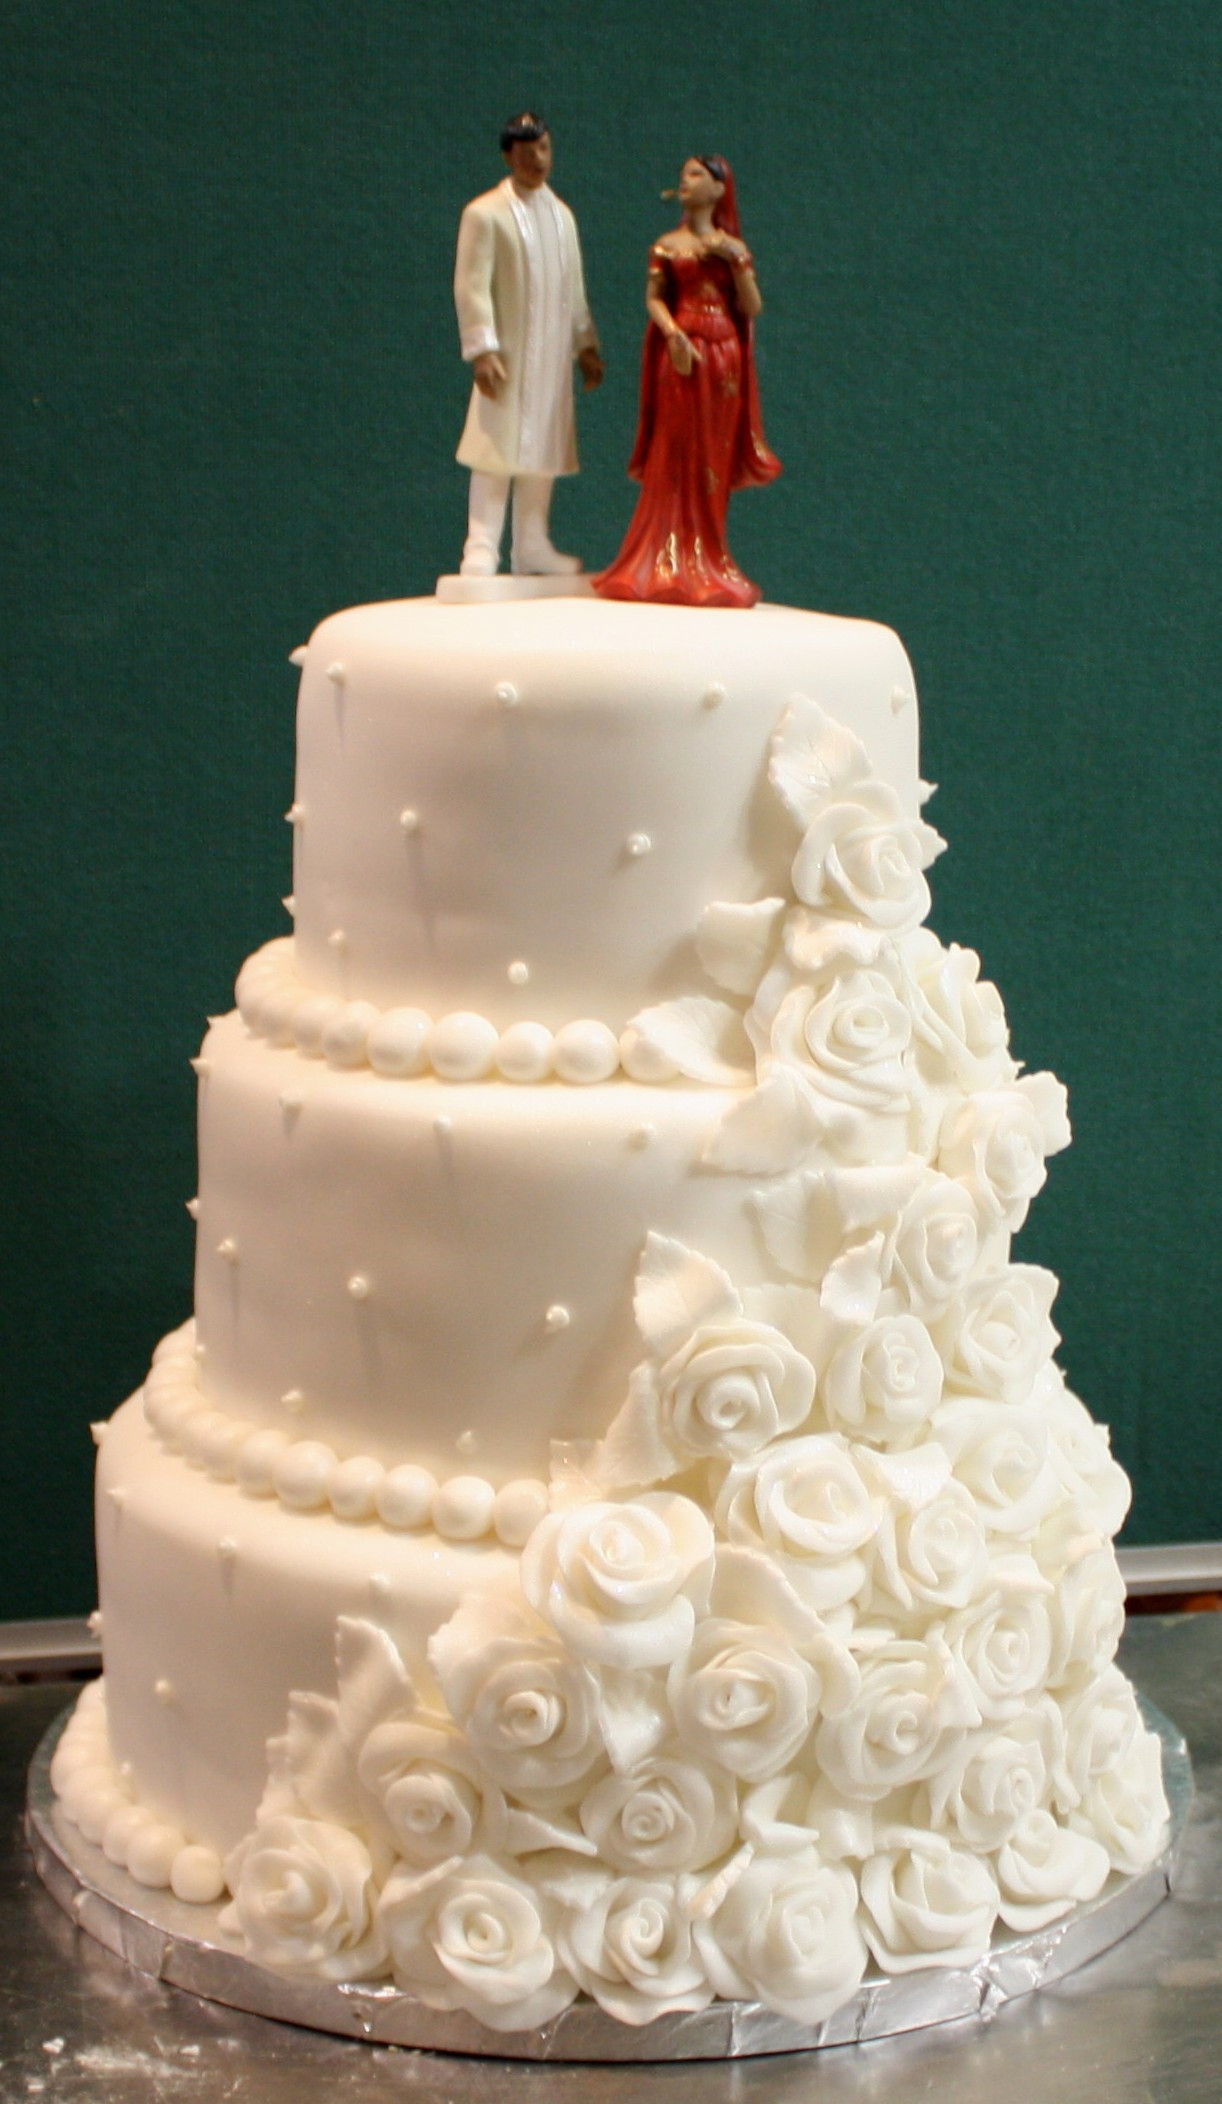 Designer Wedding Cakes the Best Ideas for Wedding Cakes 2013 Cakes and Cupcakes Mumbai